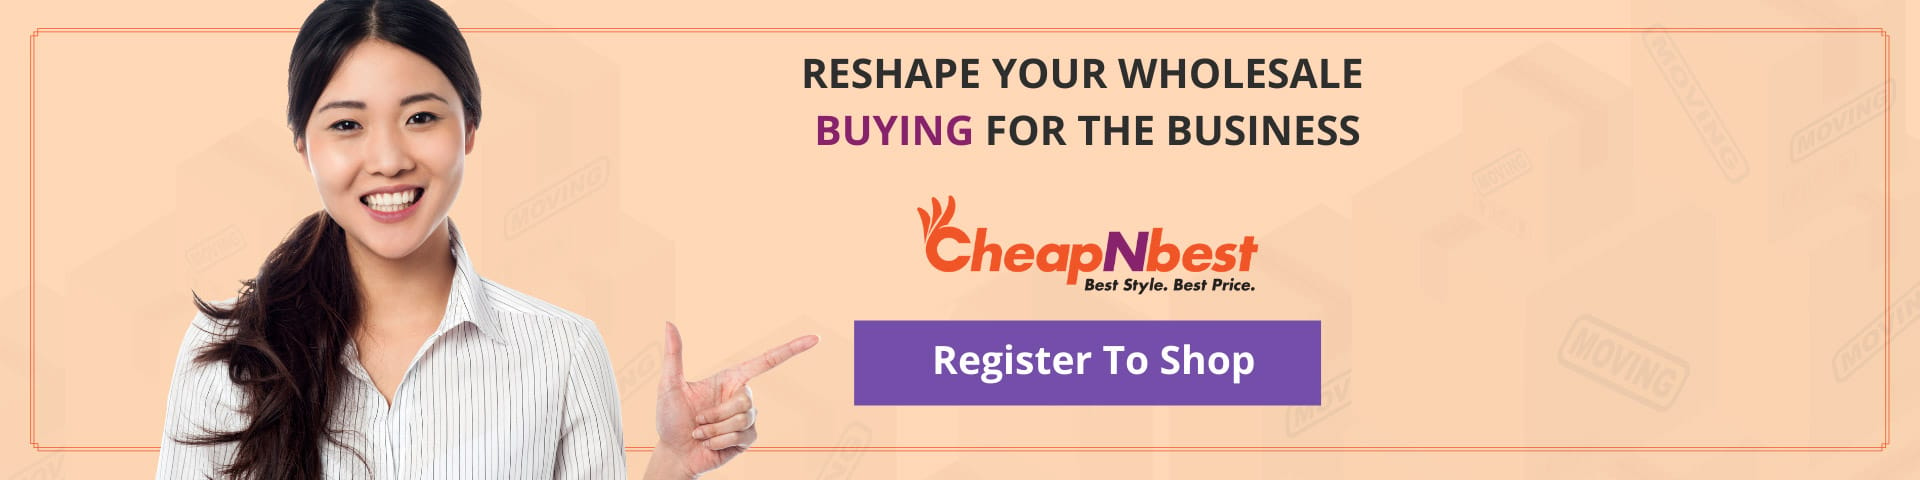 CheapNbest - Register as Buyer